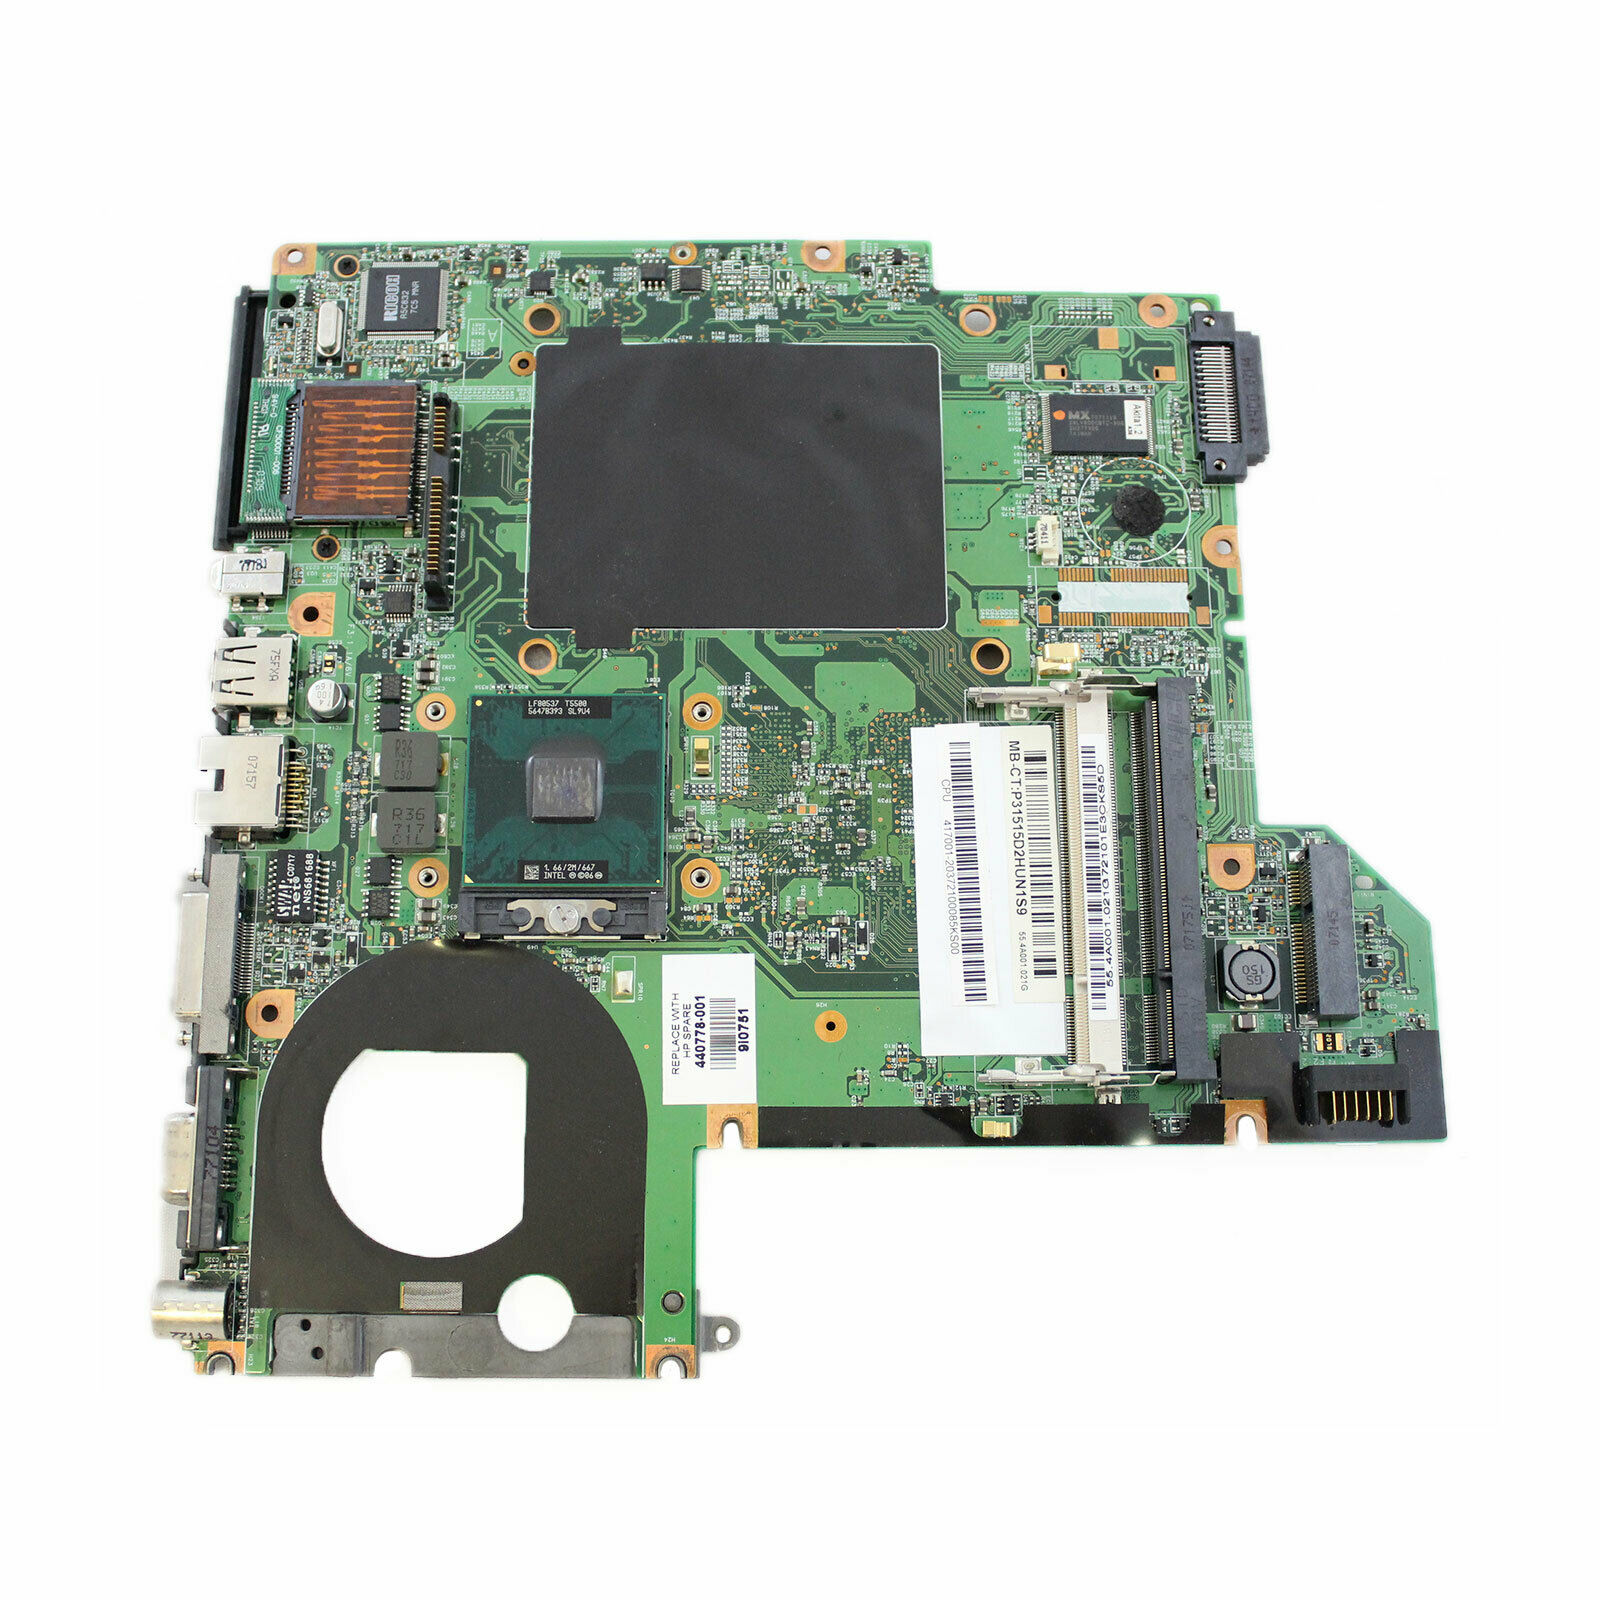 HP dv2000 motherboard intel core 2 Duo t5500 uma motherboard 440778-001 used MPN: 440778-001 Compatibilidad